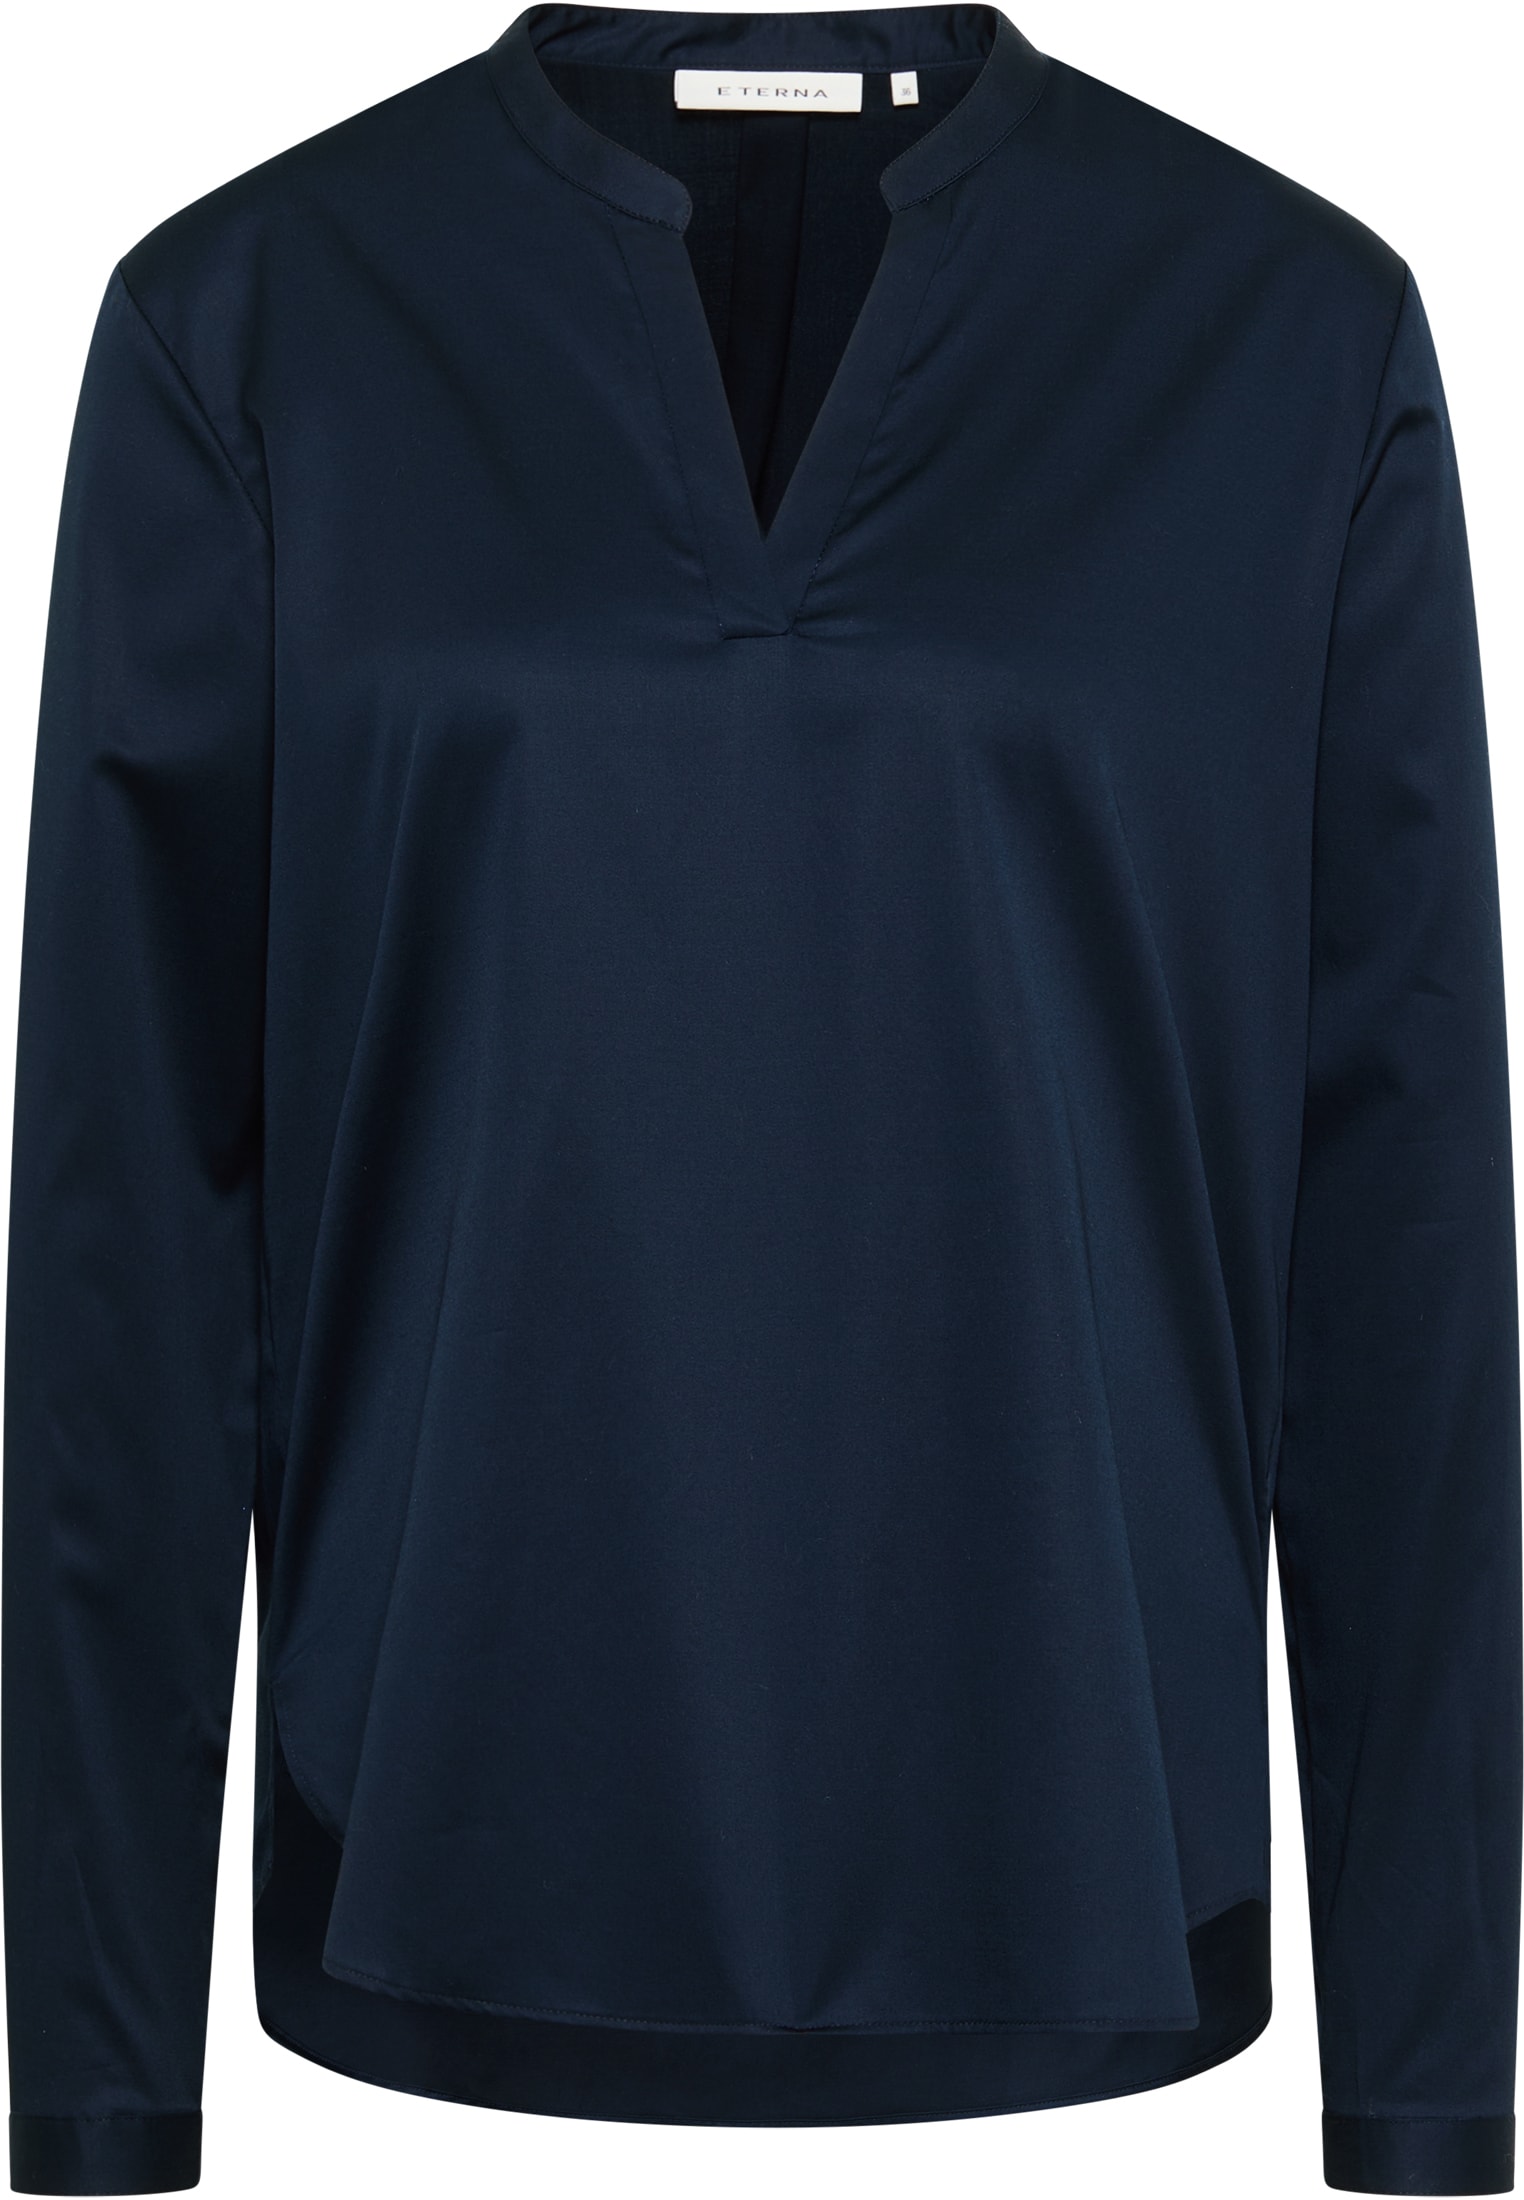 Satin Shirt Bluse in dunkelblau | 2BL00618-01-81-48-1/1 Langarm | 48 | unifarben | dunkelblau